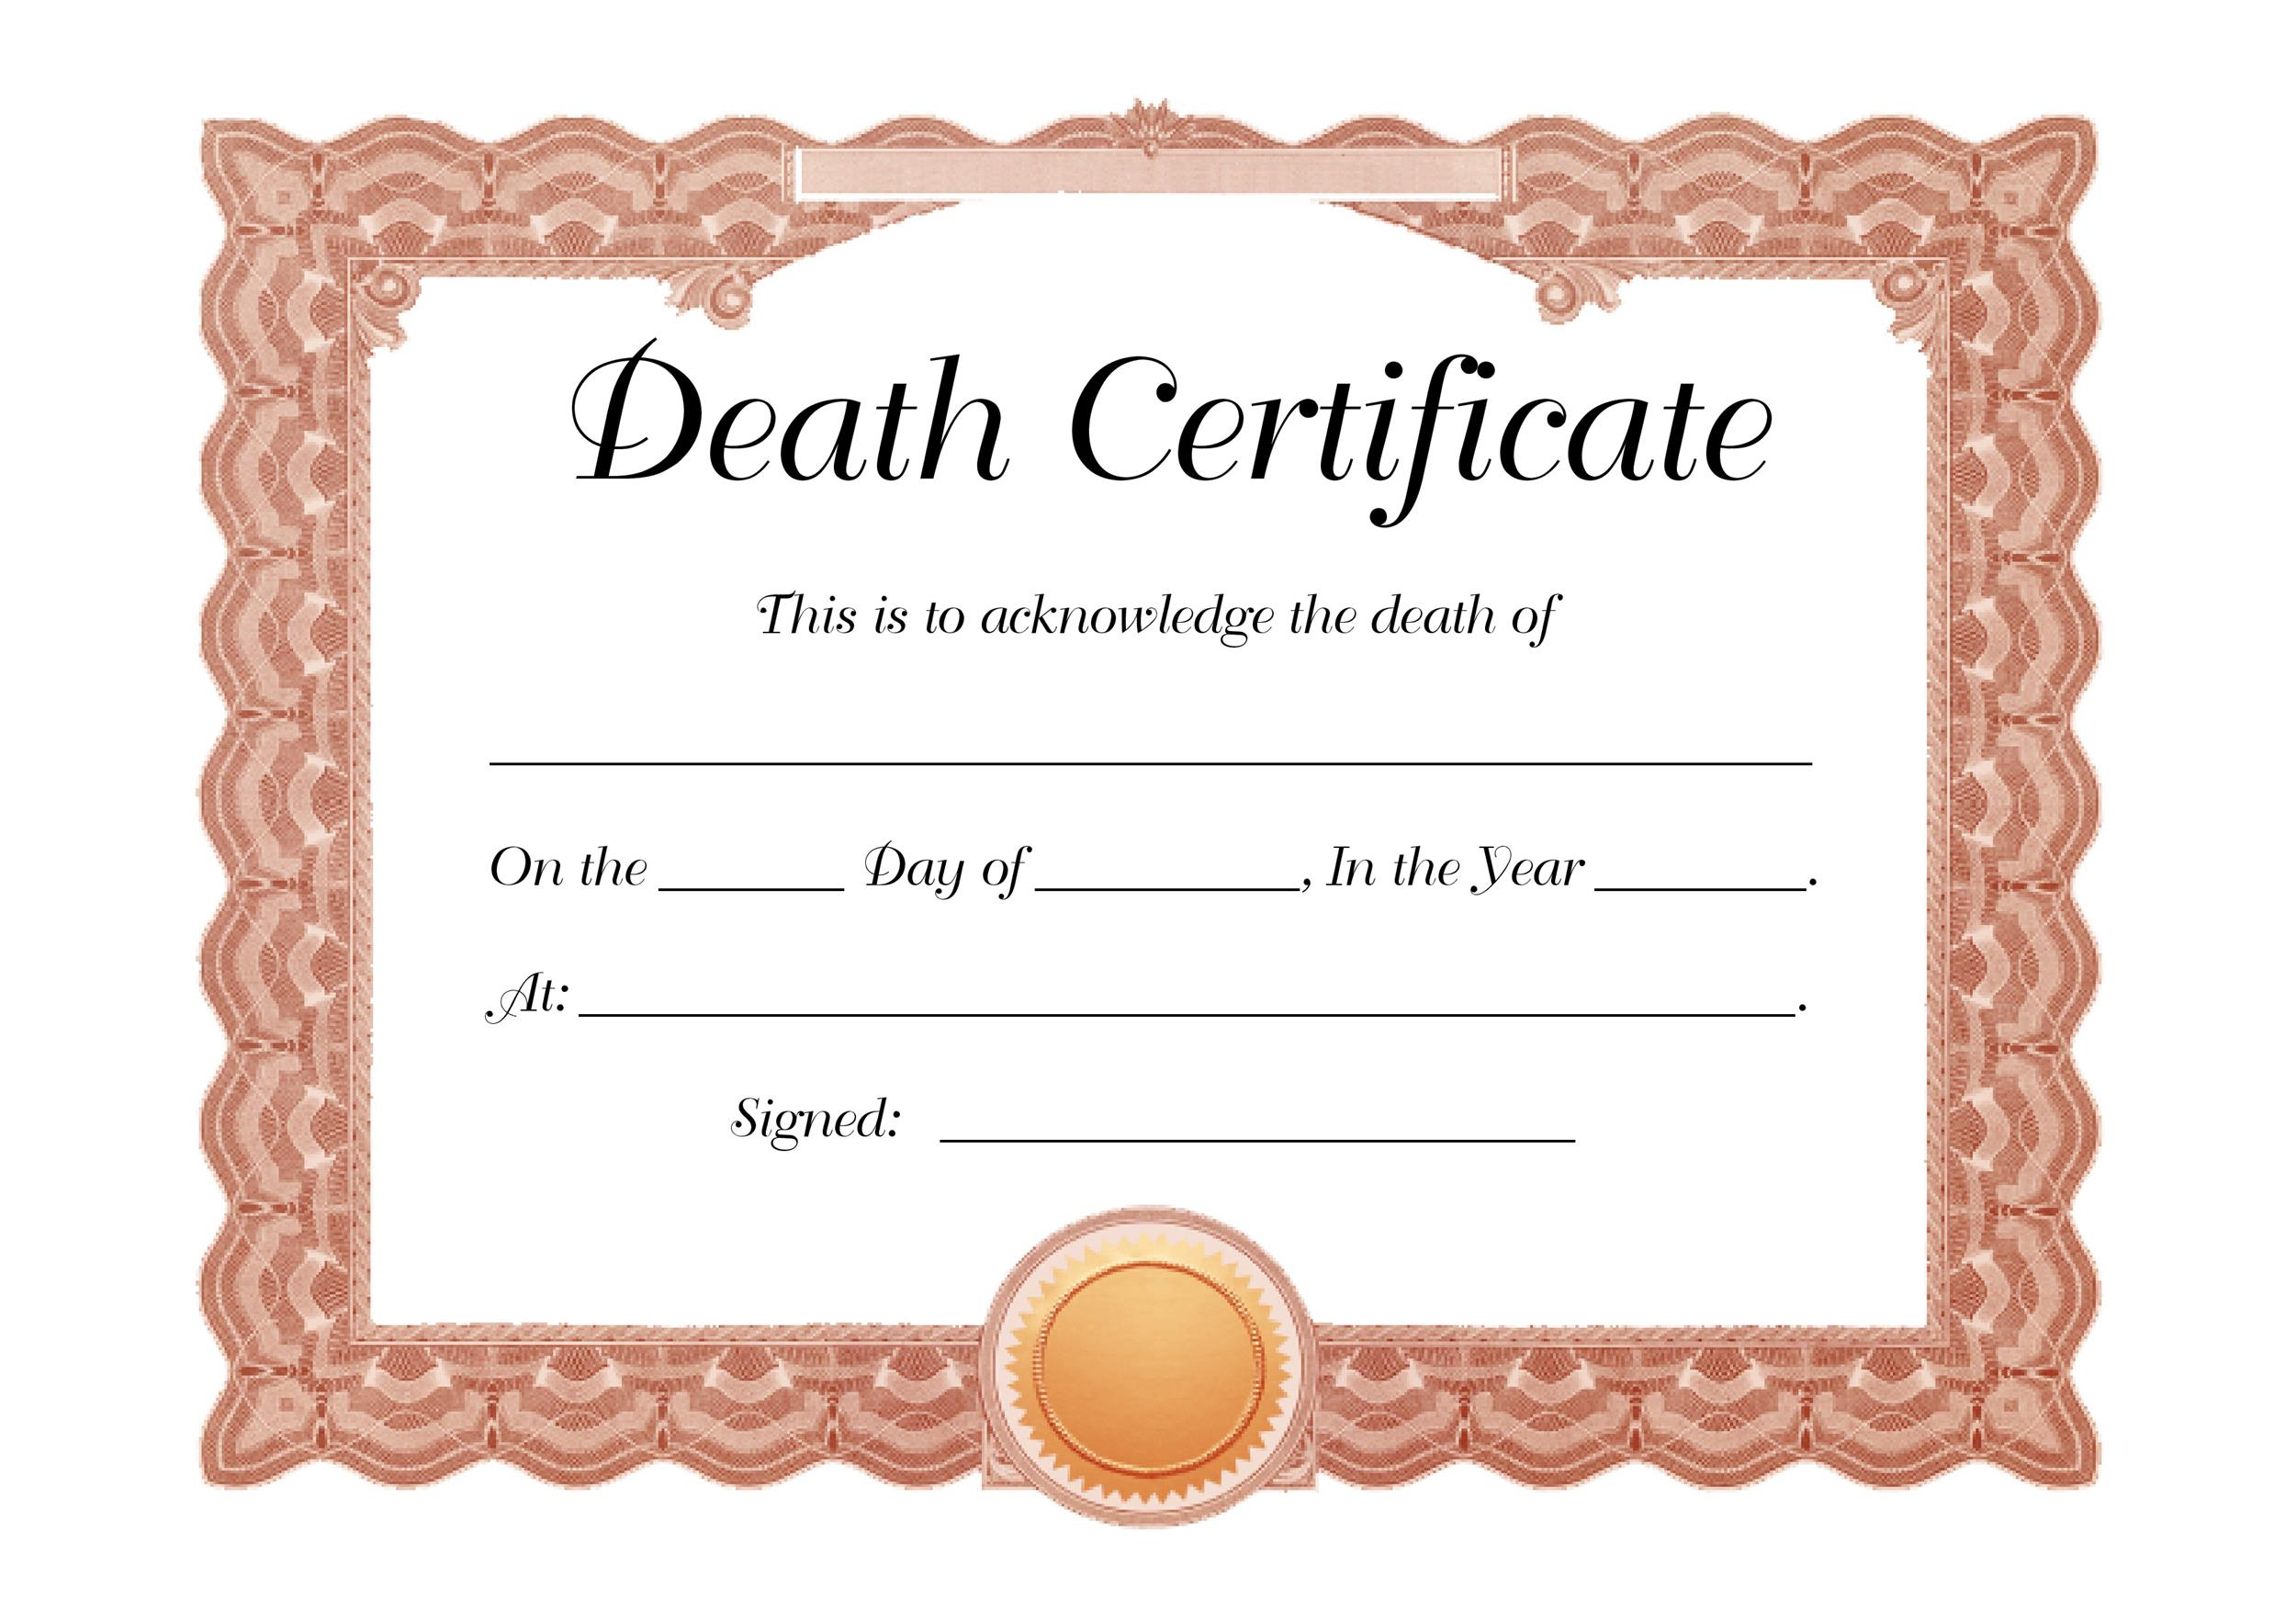 Buy Death Certificate Online - Order Docs Online For Fake Death Certificate Template